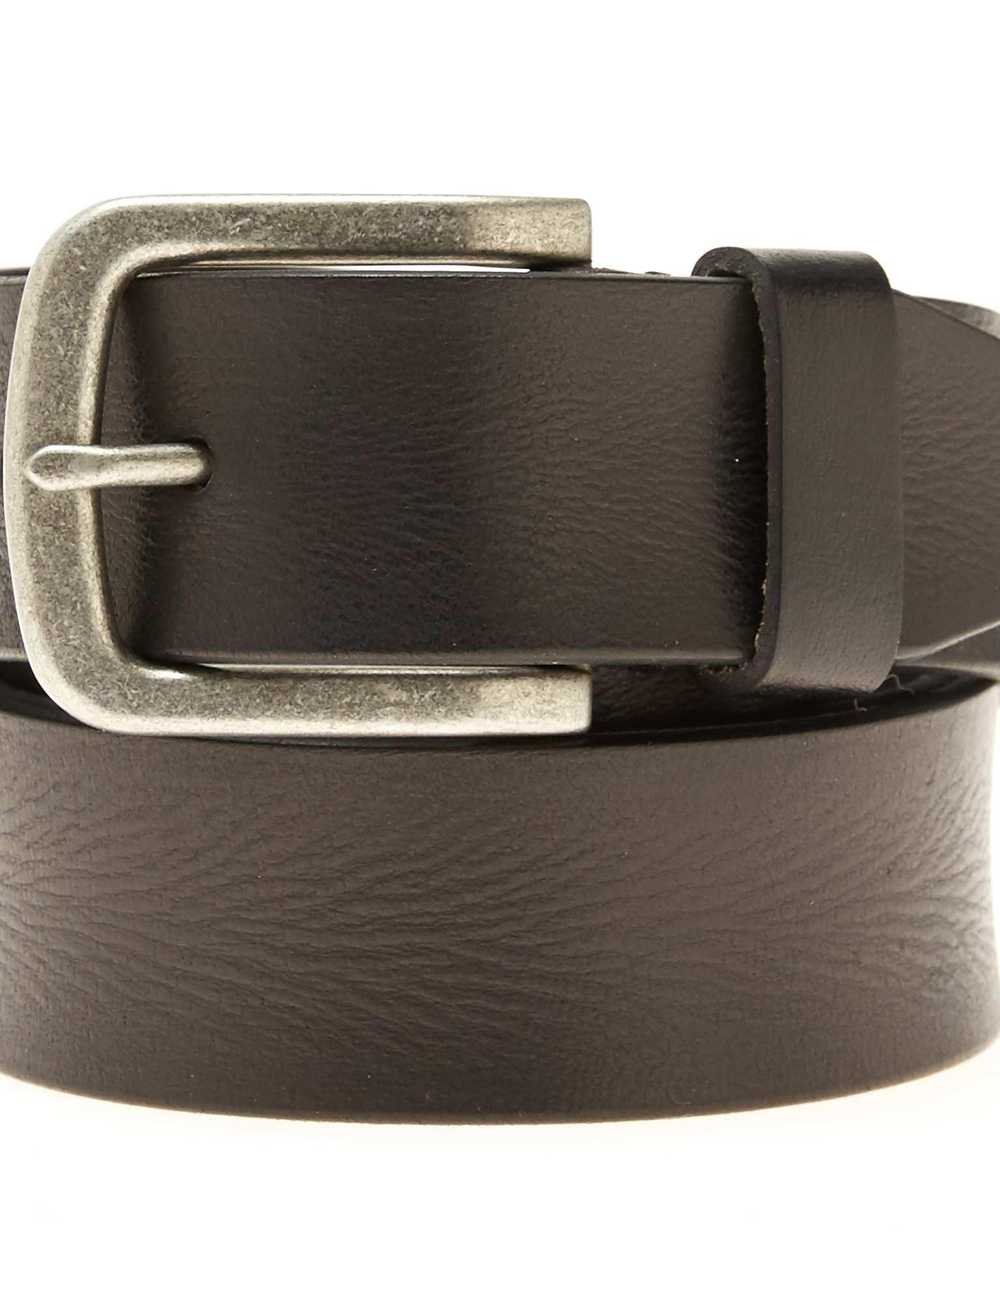 Buy AE Wide Leather Belt online